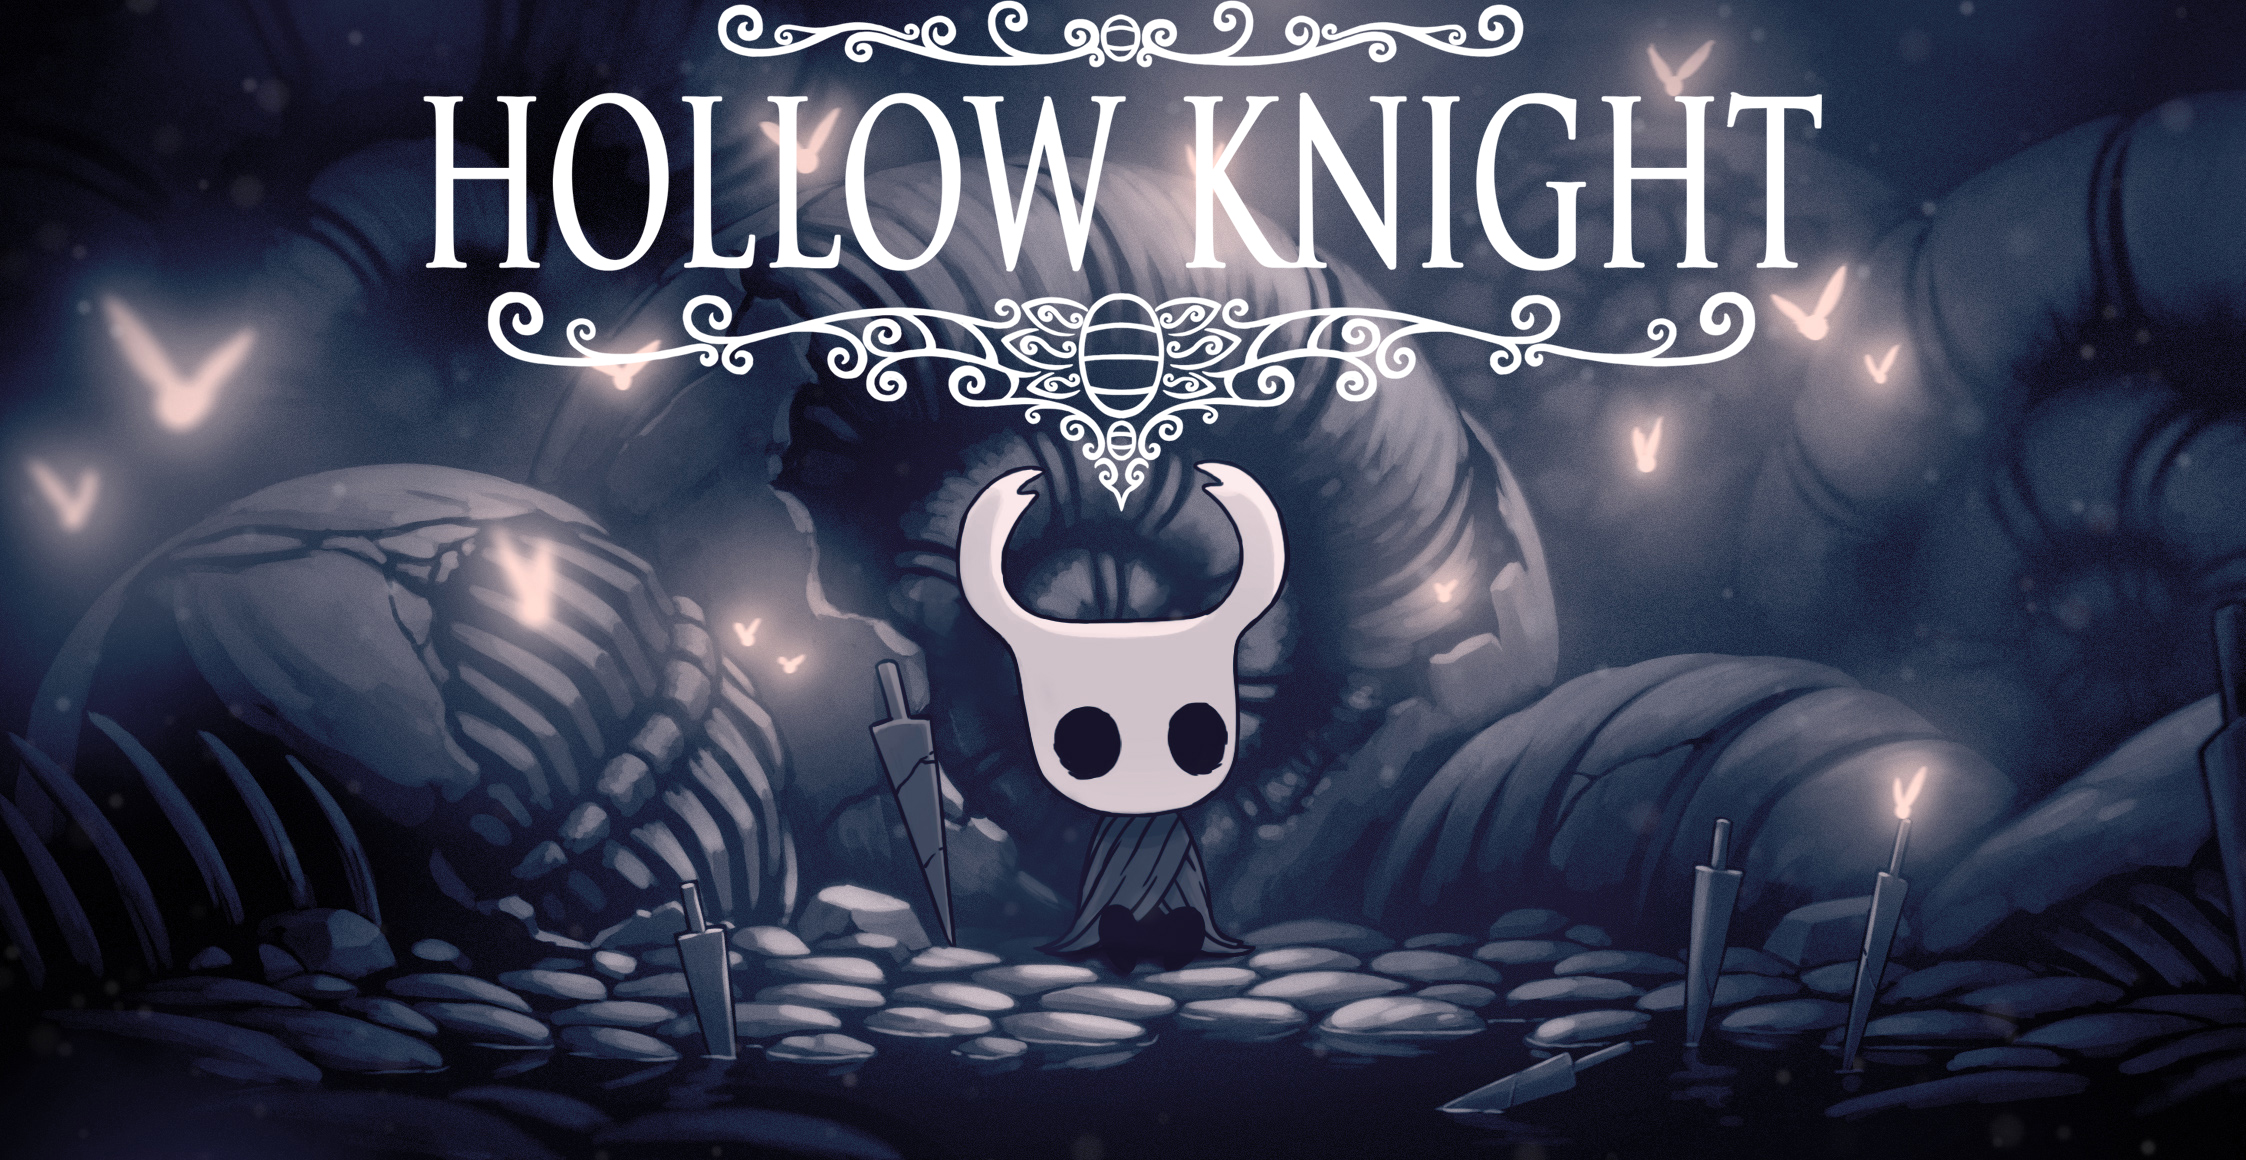 Hollow Knight VoidHeart Edition Playstation 4 Walkthrough - No Commentary 